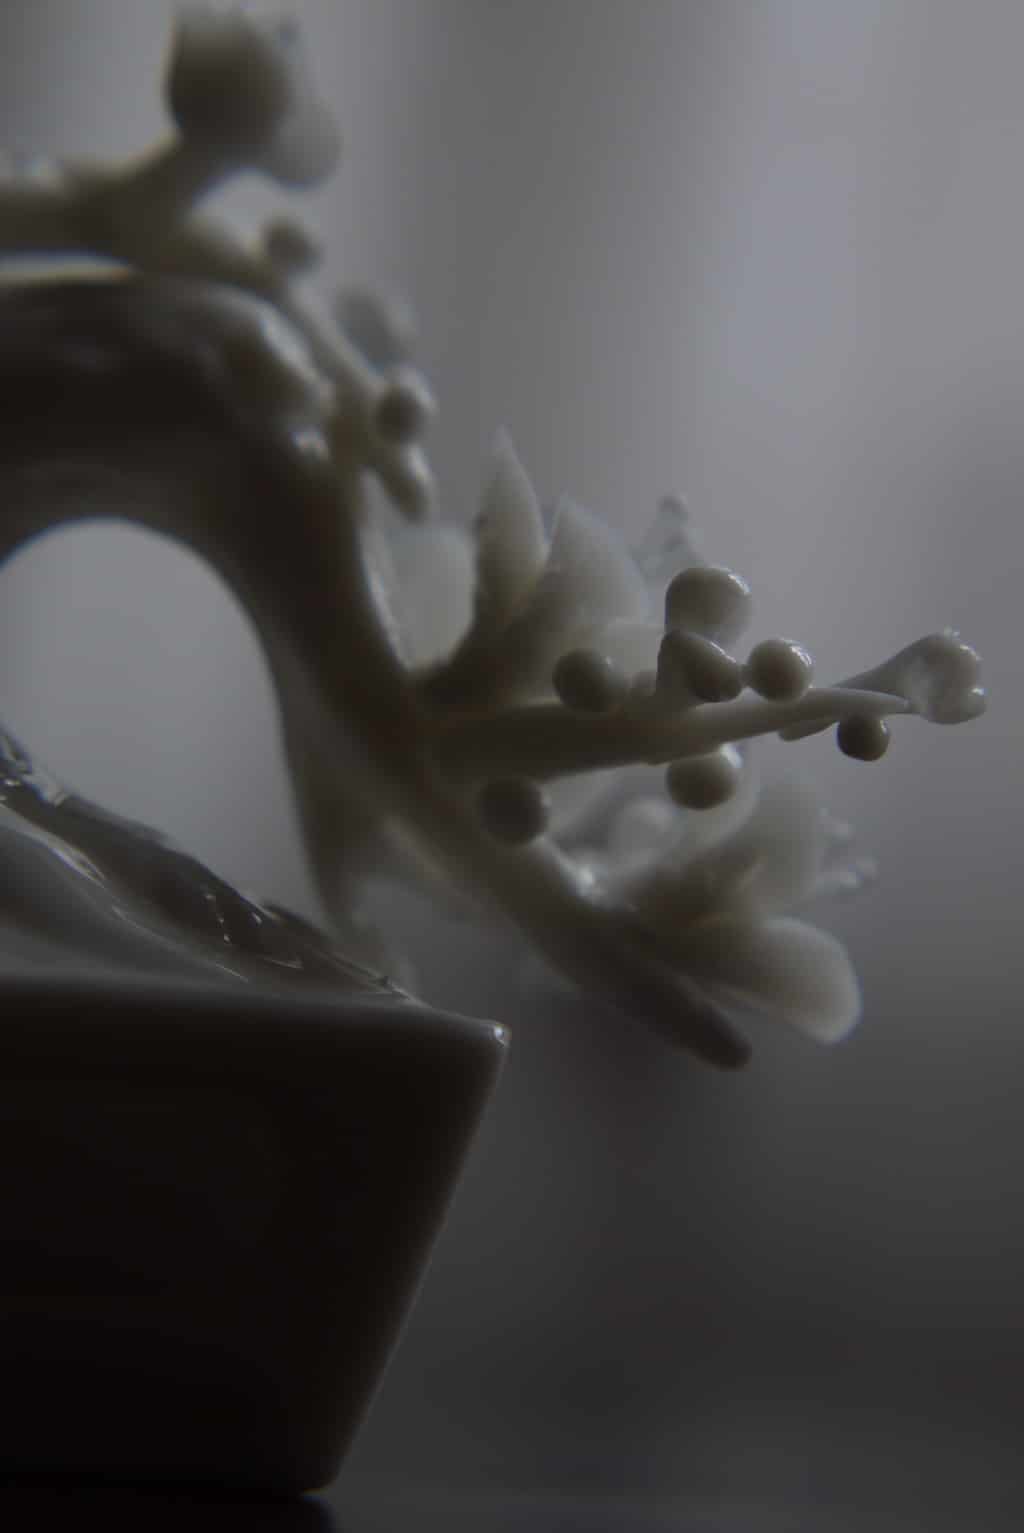 Chinese Plum Flower Sculpture For Tea Table Room | BestCeramics